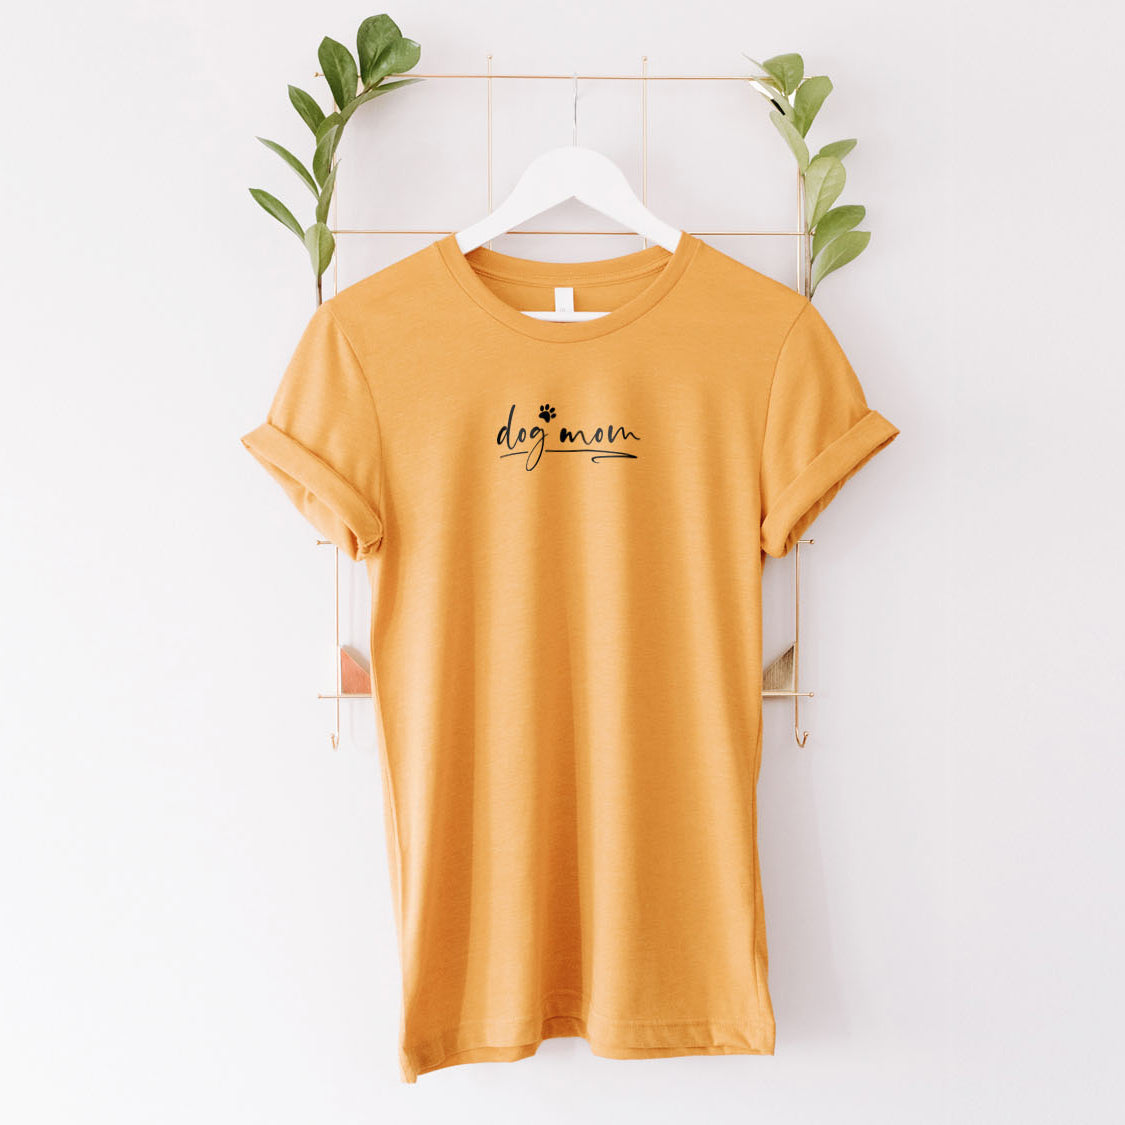 Dog Mom Small Letters T-shirt - Fun Pet Love Minimal Design Printed Tee Shirt